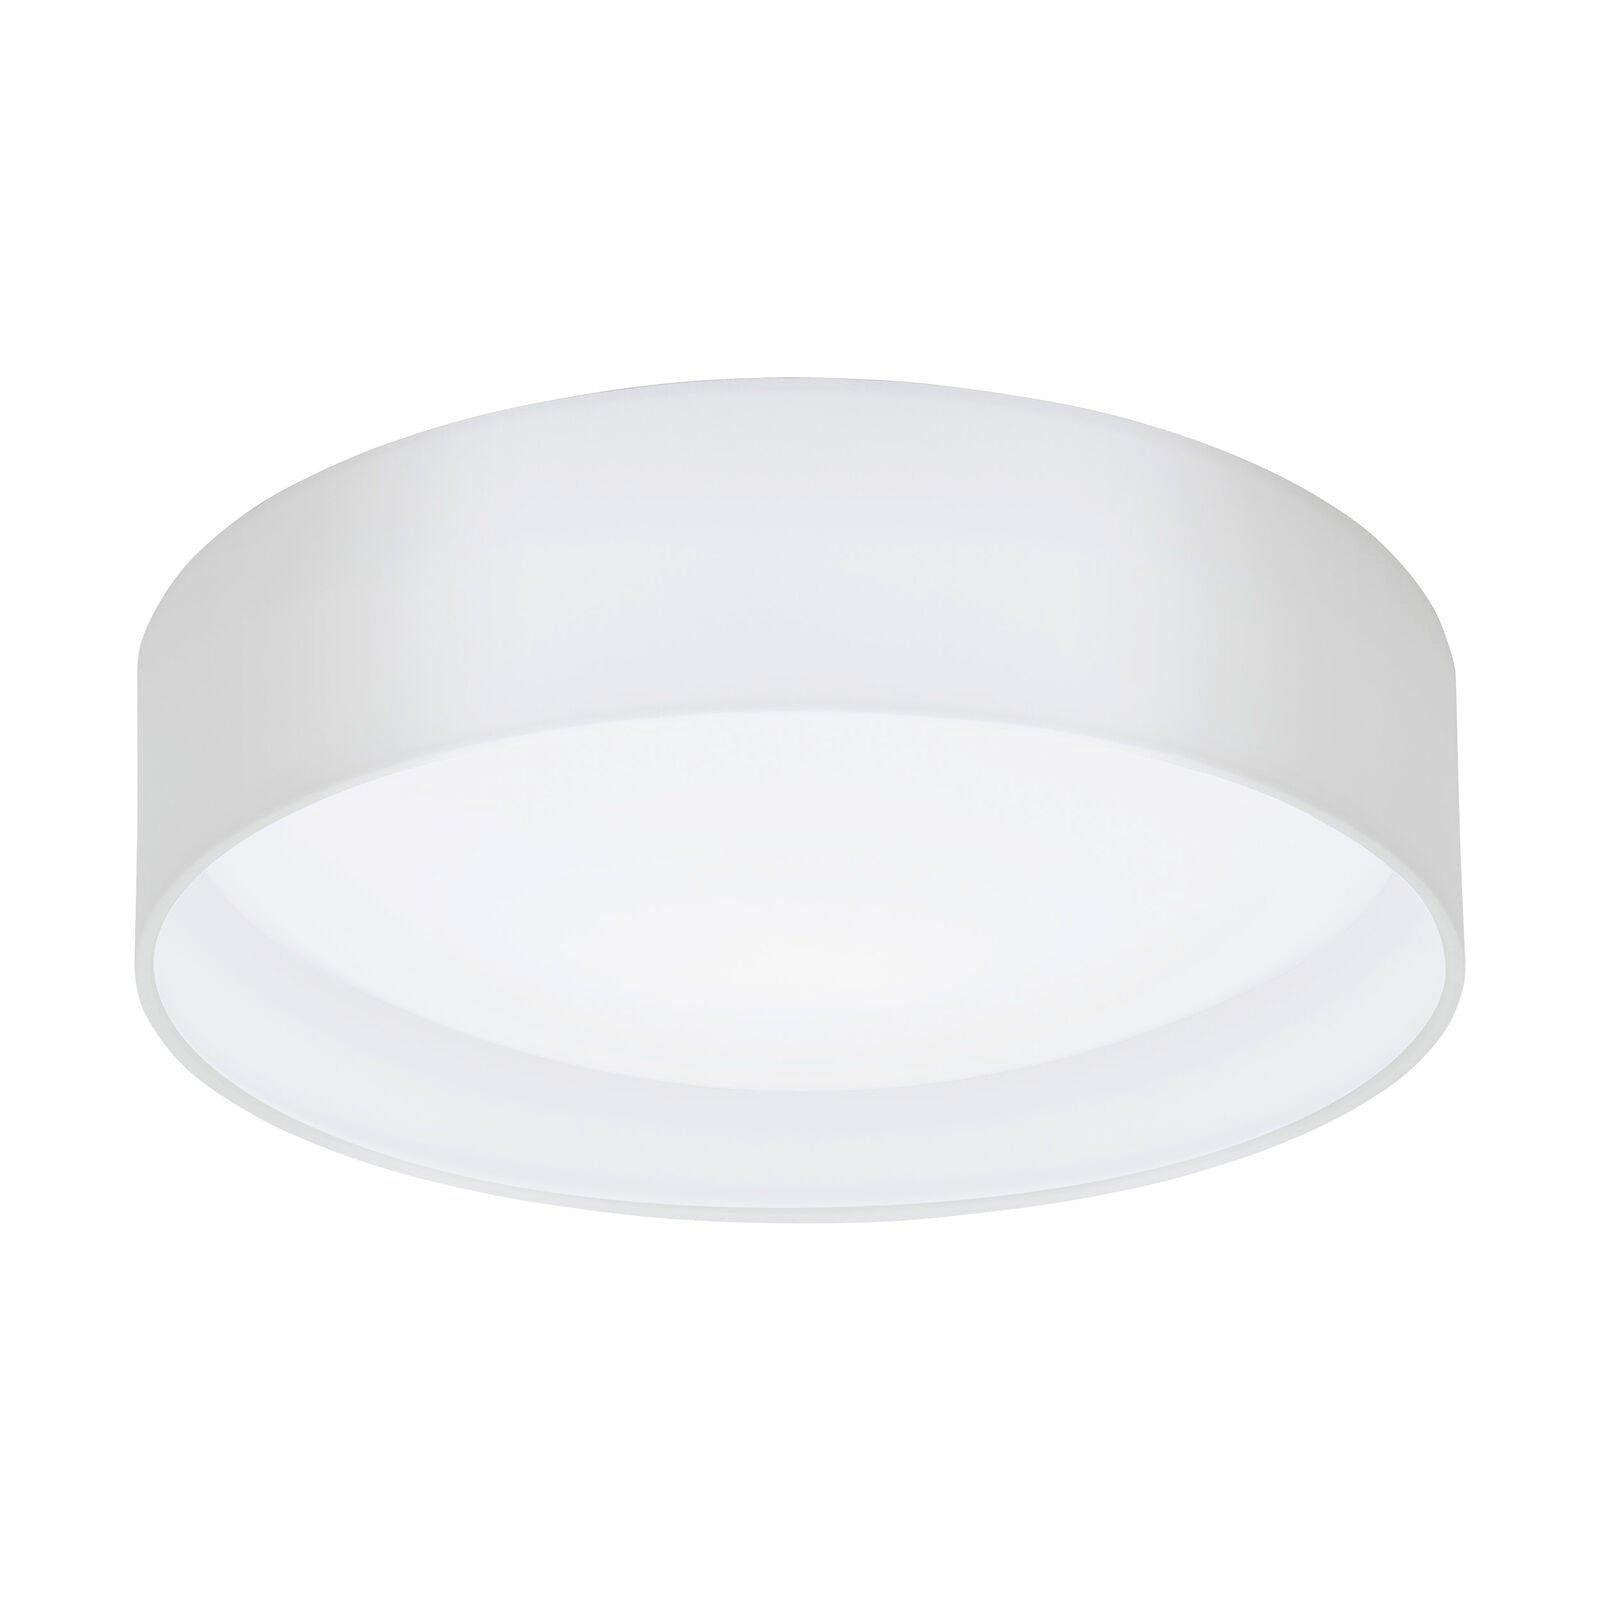 Flush Ceiling Light Colour White Shade White Fabric Bulb LED 11W Included - image 1